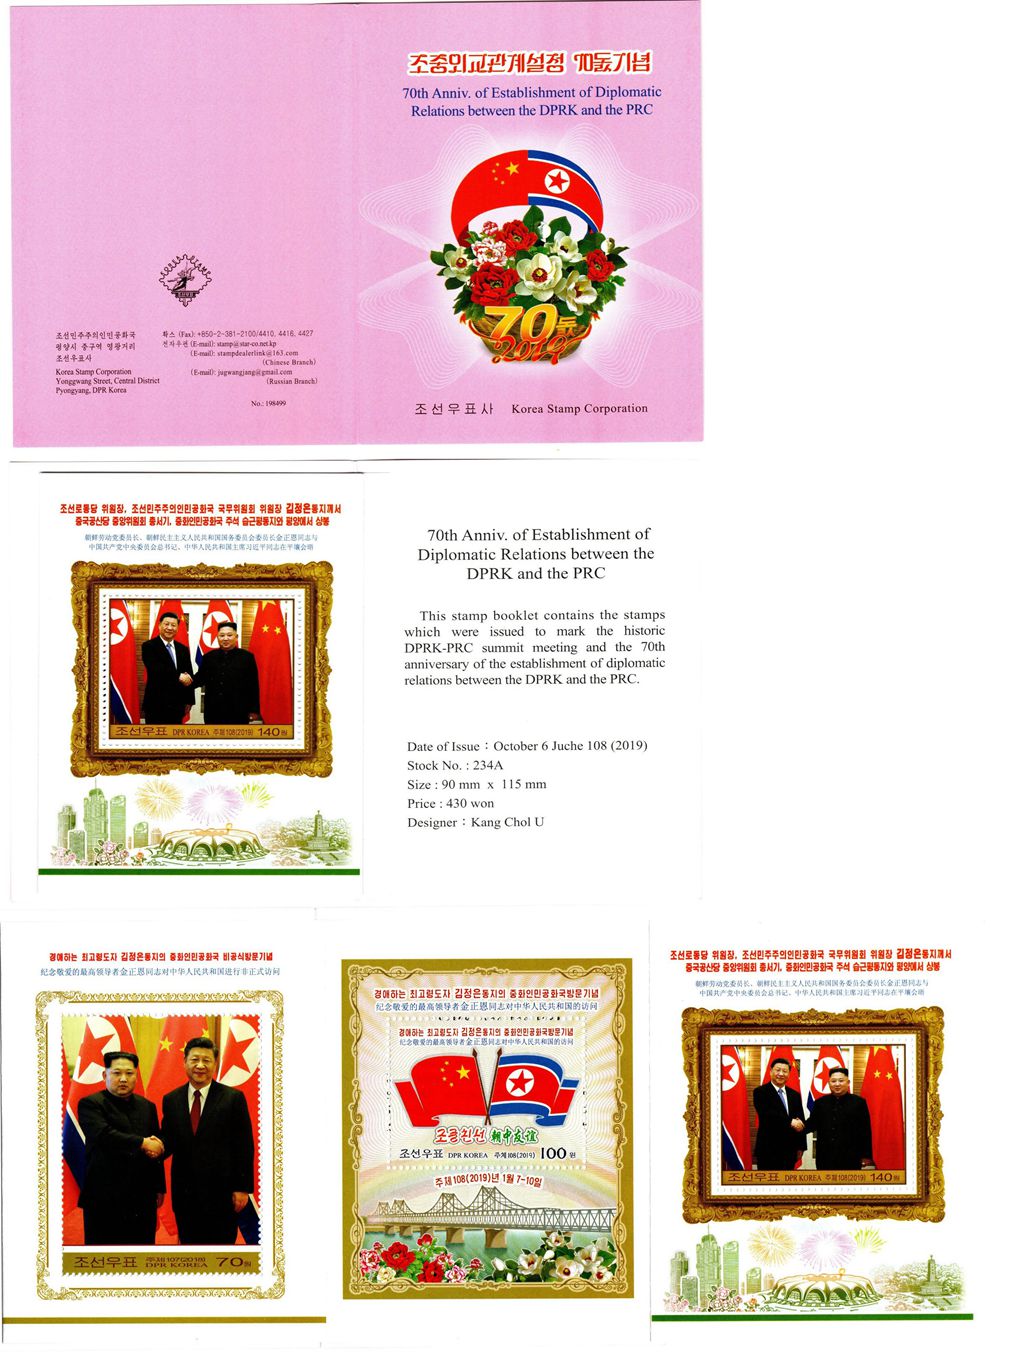 L9107, Korea "Kim Visting China and Relationship" Stamp Booklet, 2019, 4 Pcs MS